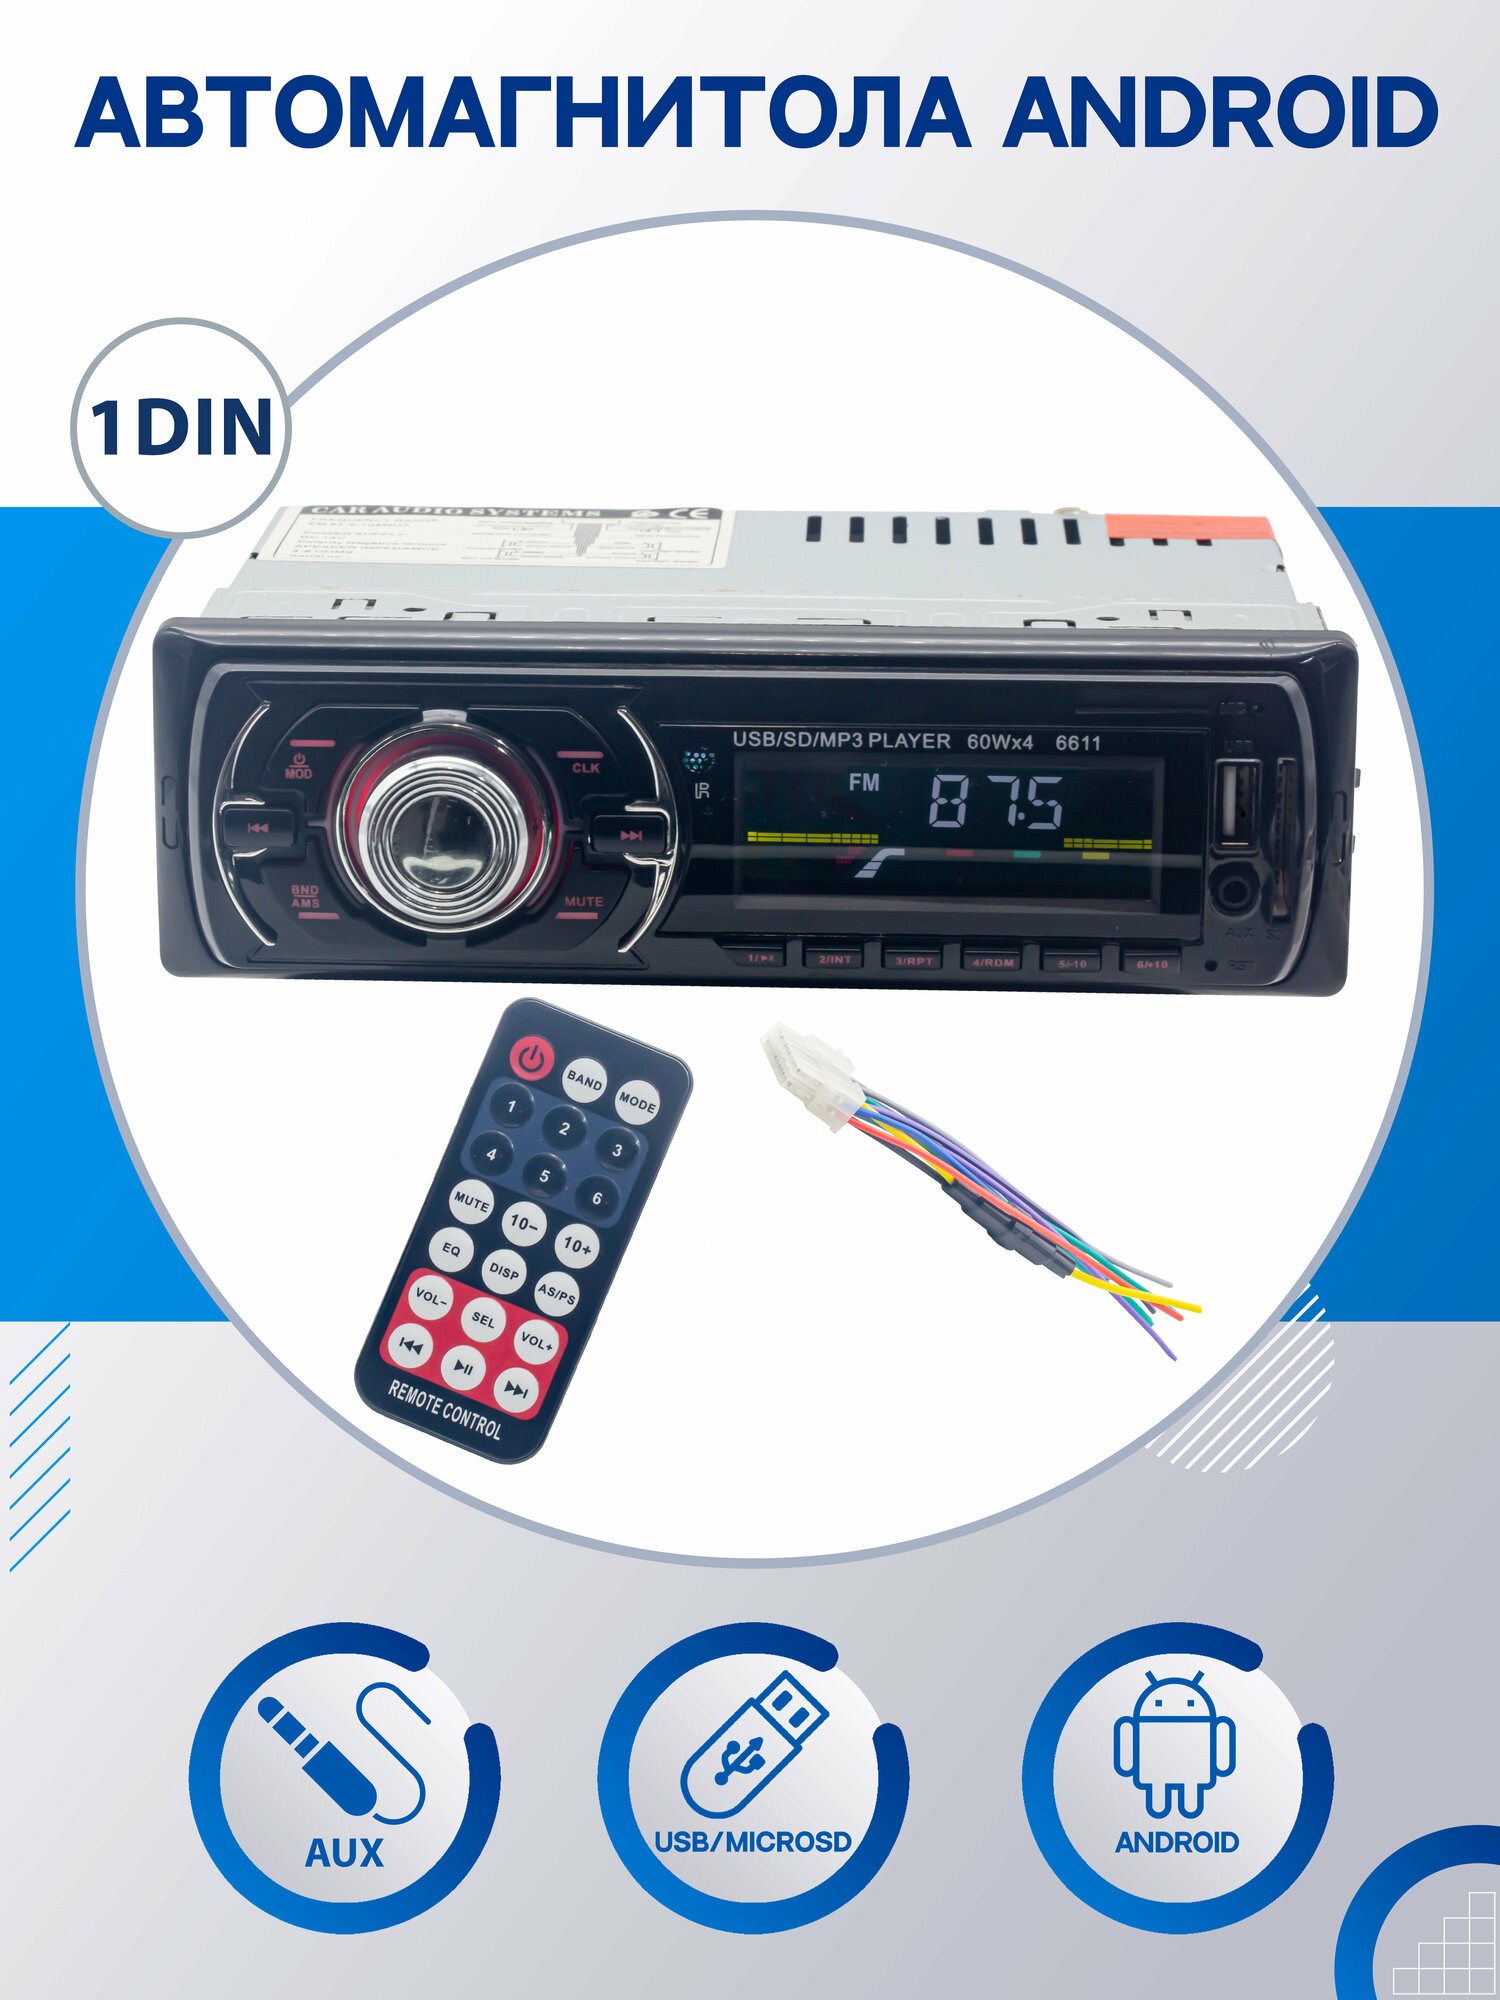 Автомагнитола 1DIN с пультом ДУ FM/USB/MP3 CDX-6611